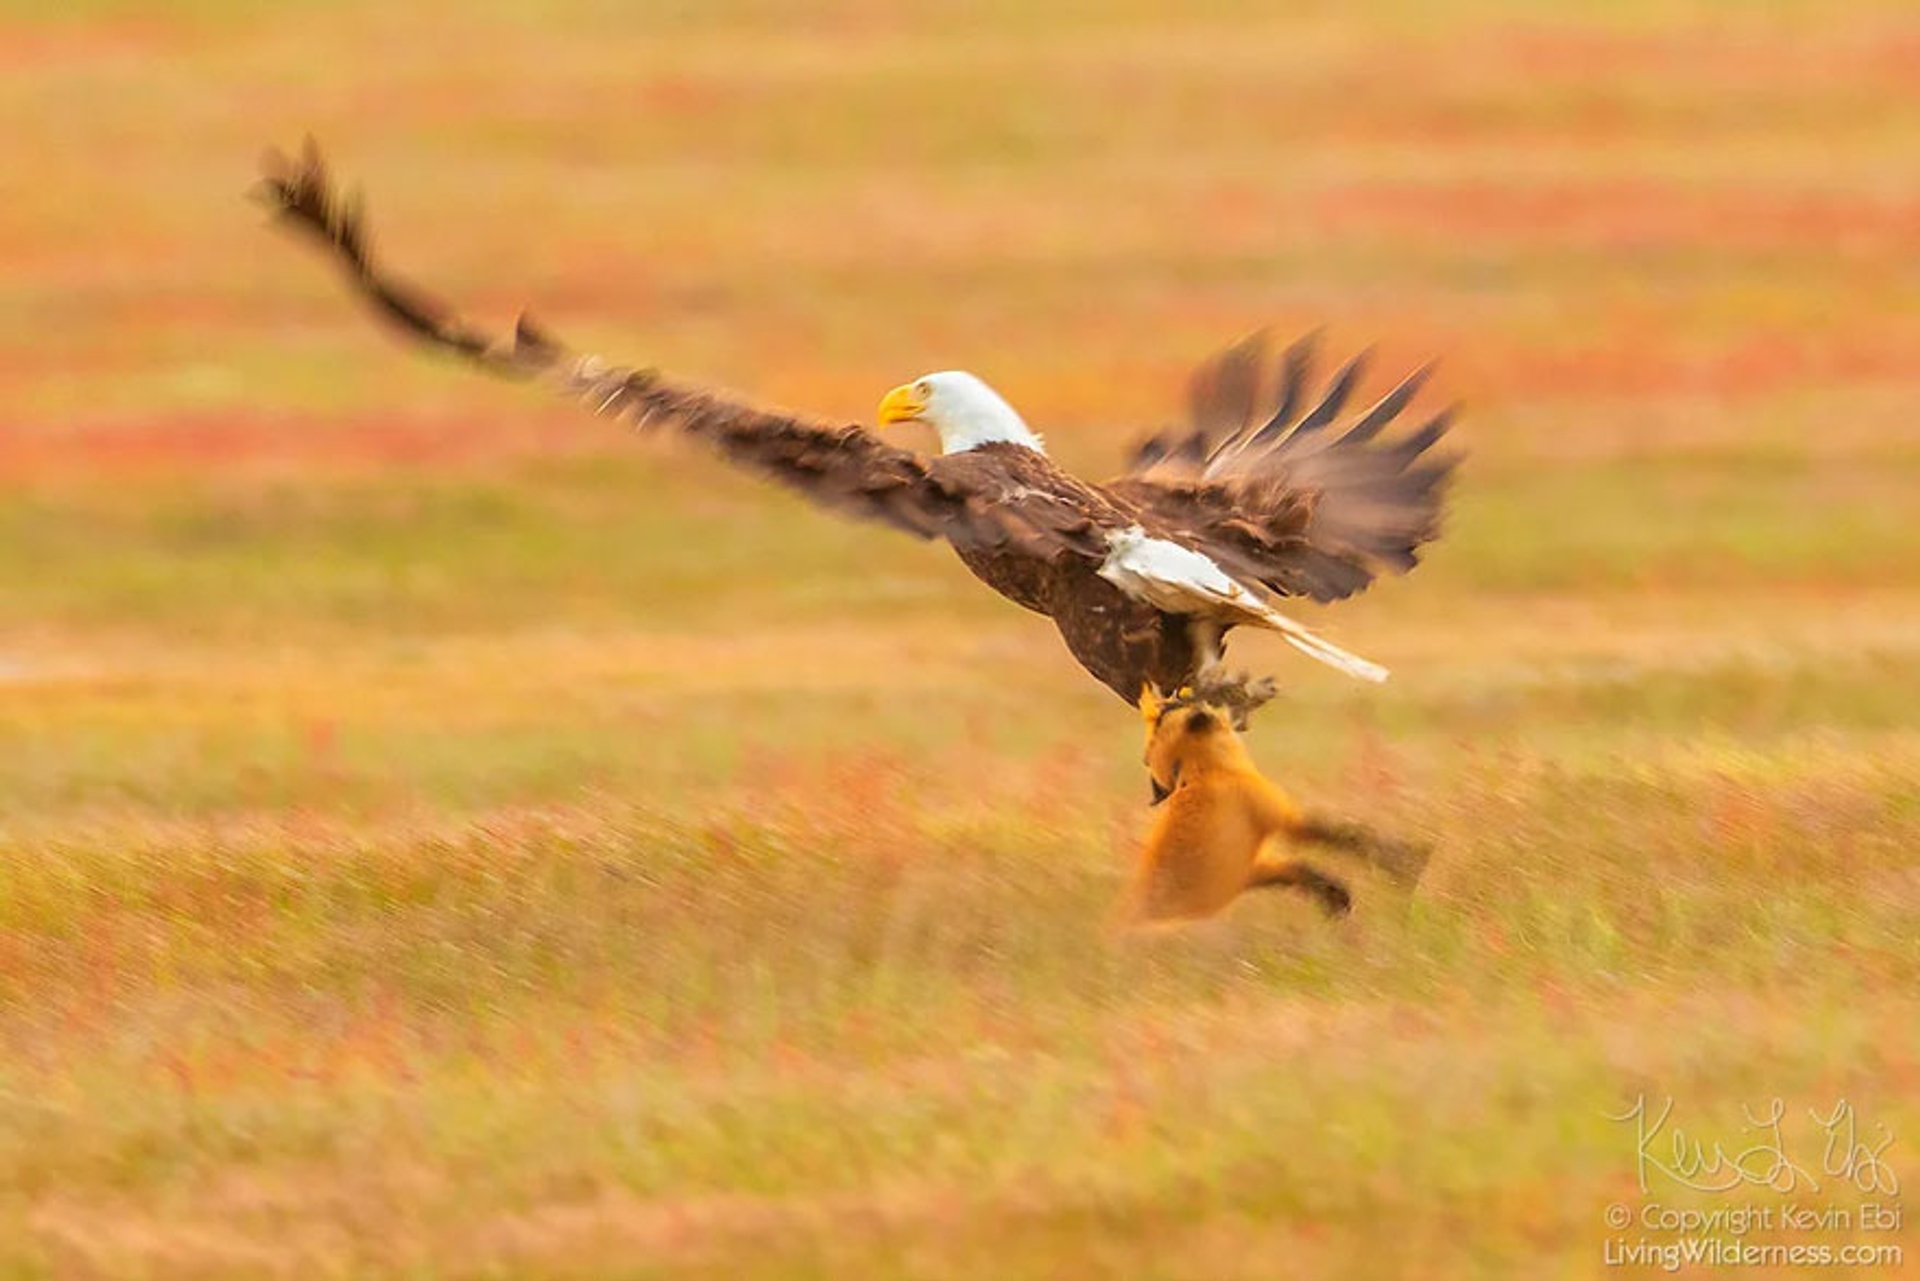 5b07de8f8b743-wildlife-photography-eagle-fox-fighting-over-rabbit-kevin-ebi-1-5b0661e3e2b7e__880